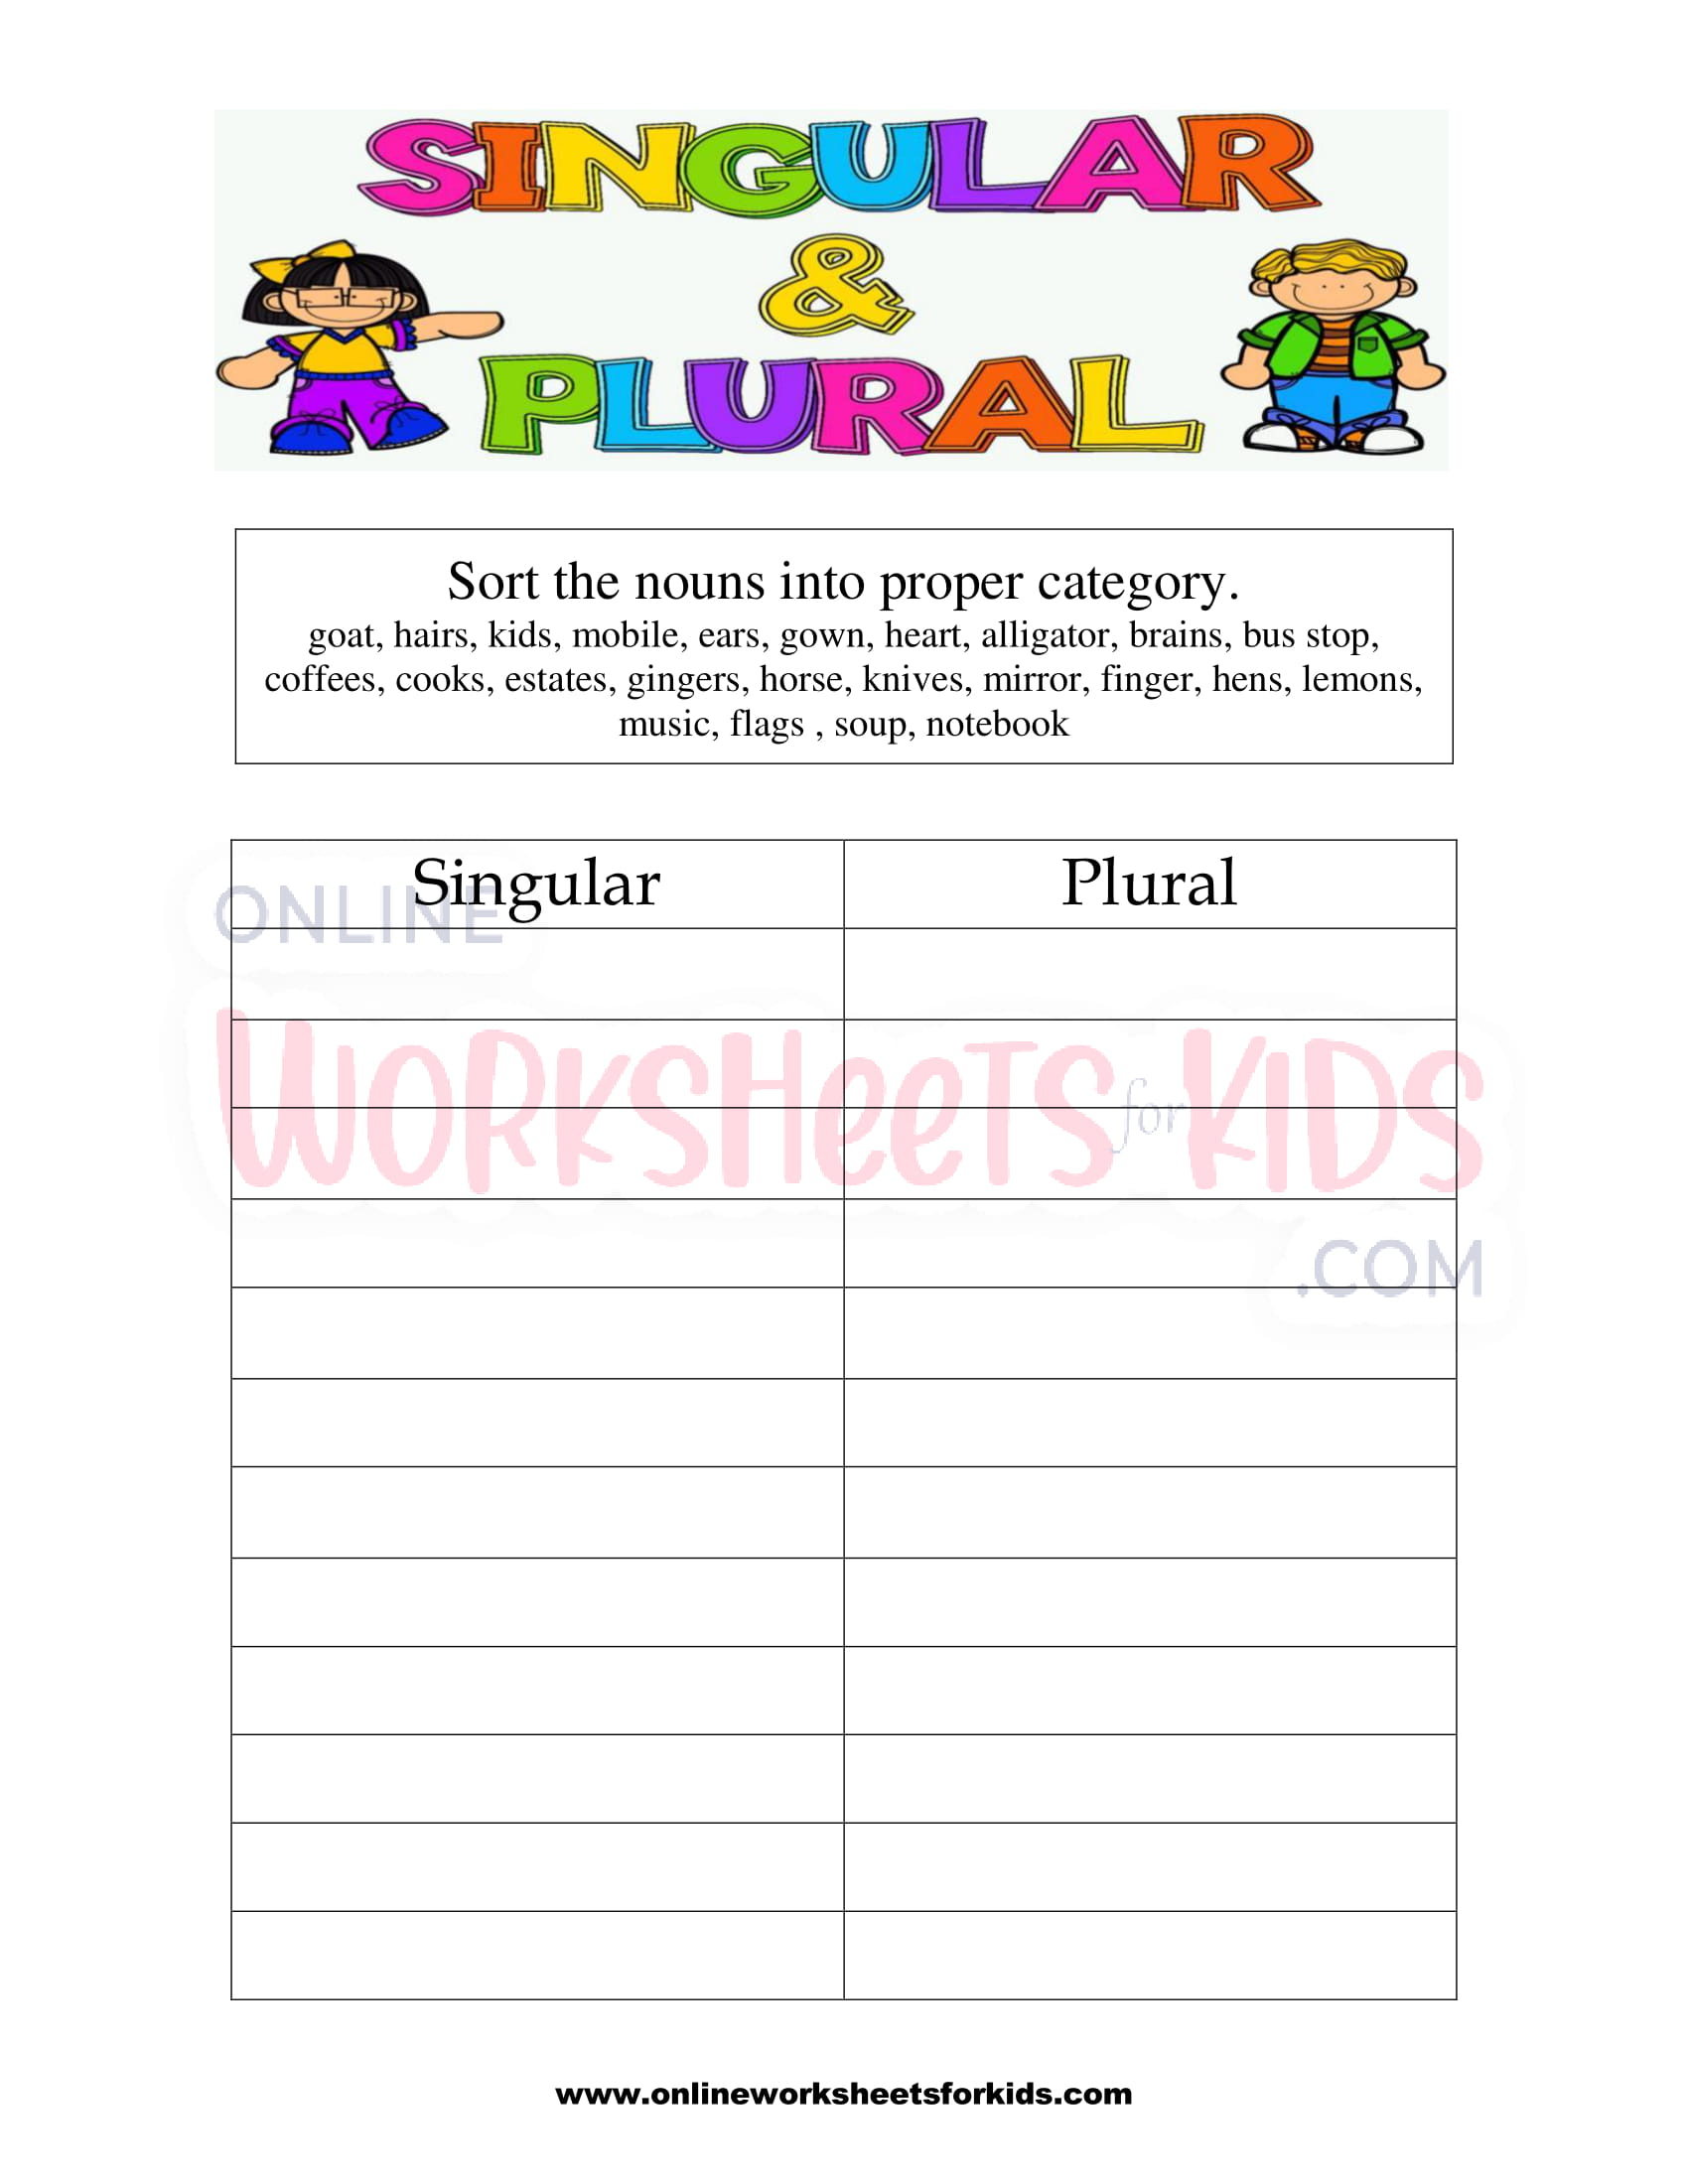 singular and plural nouns sorting worksheet 4